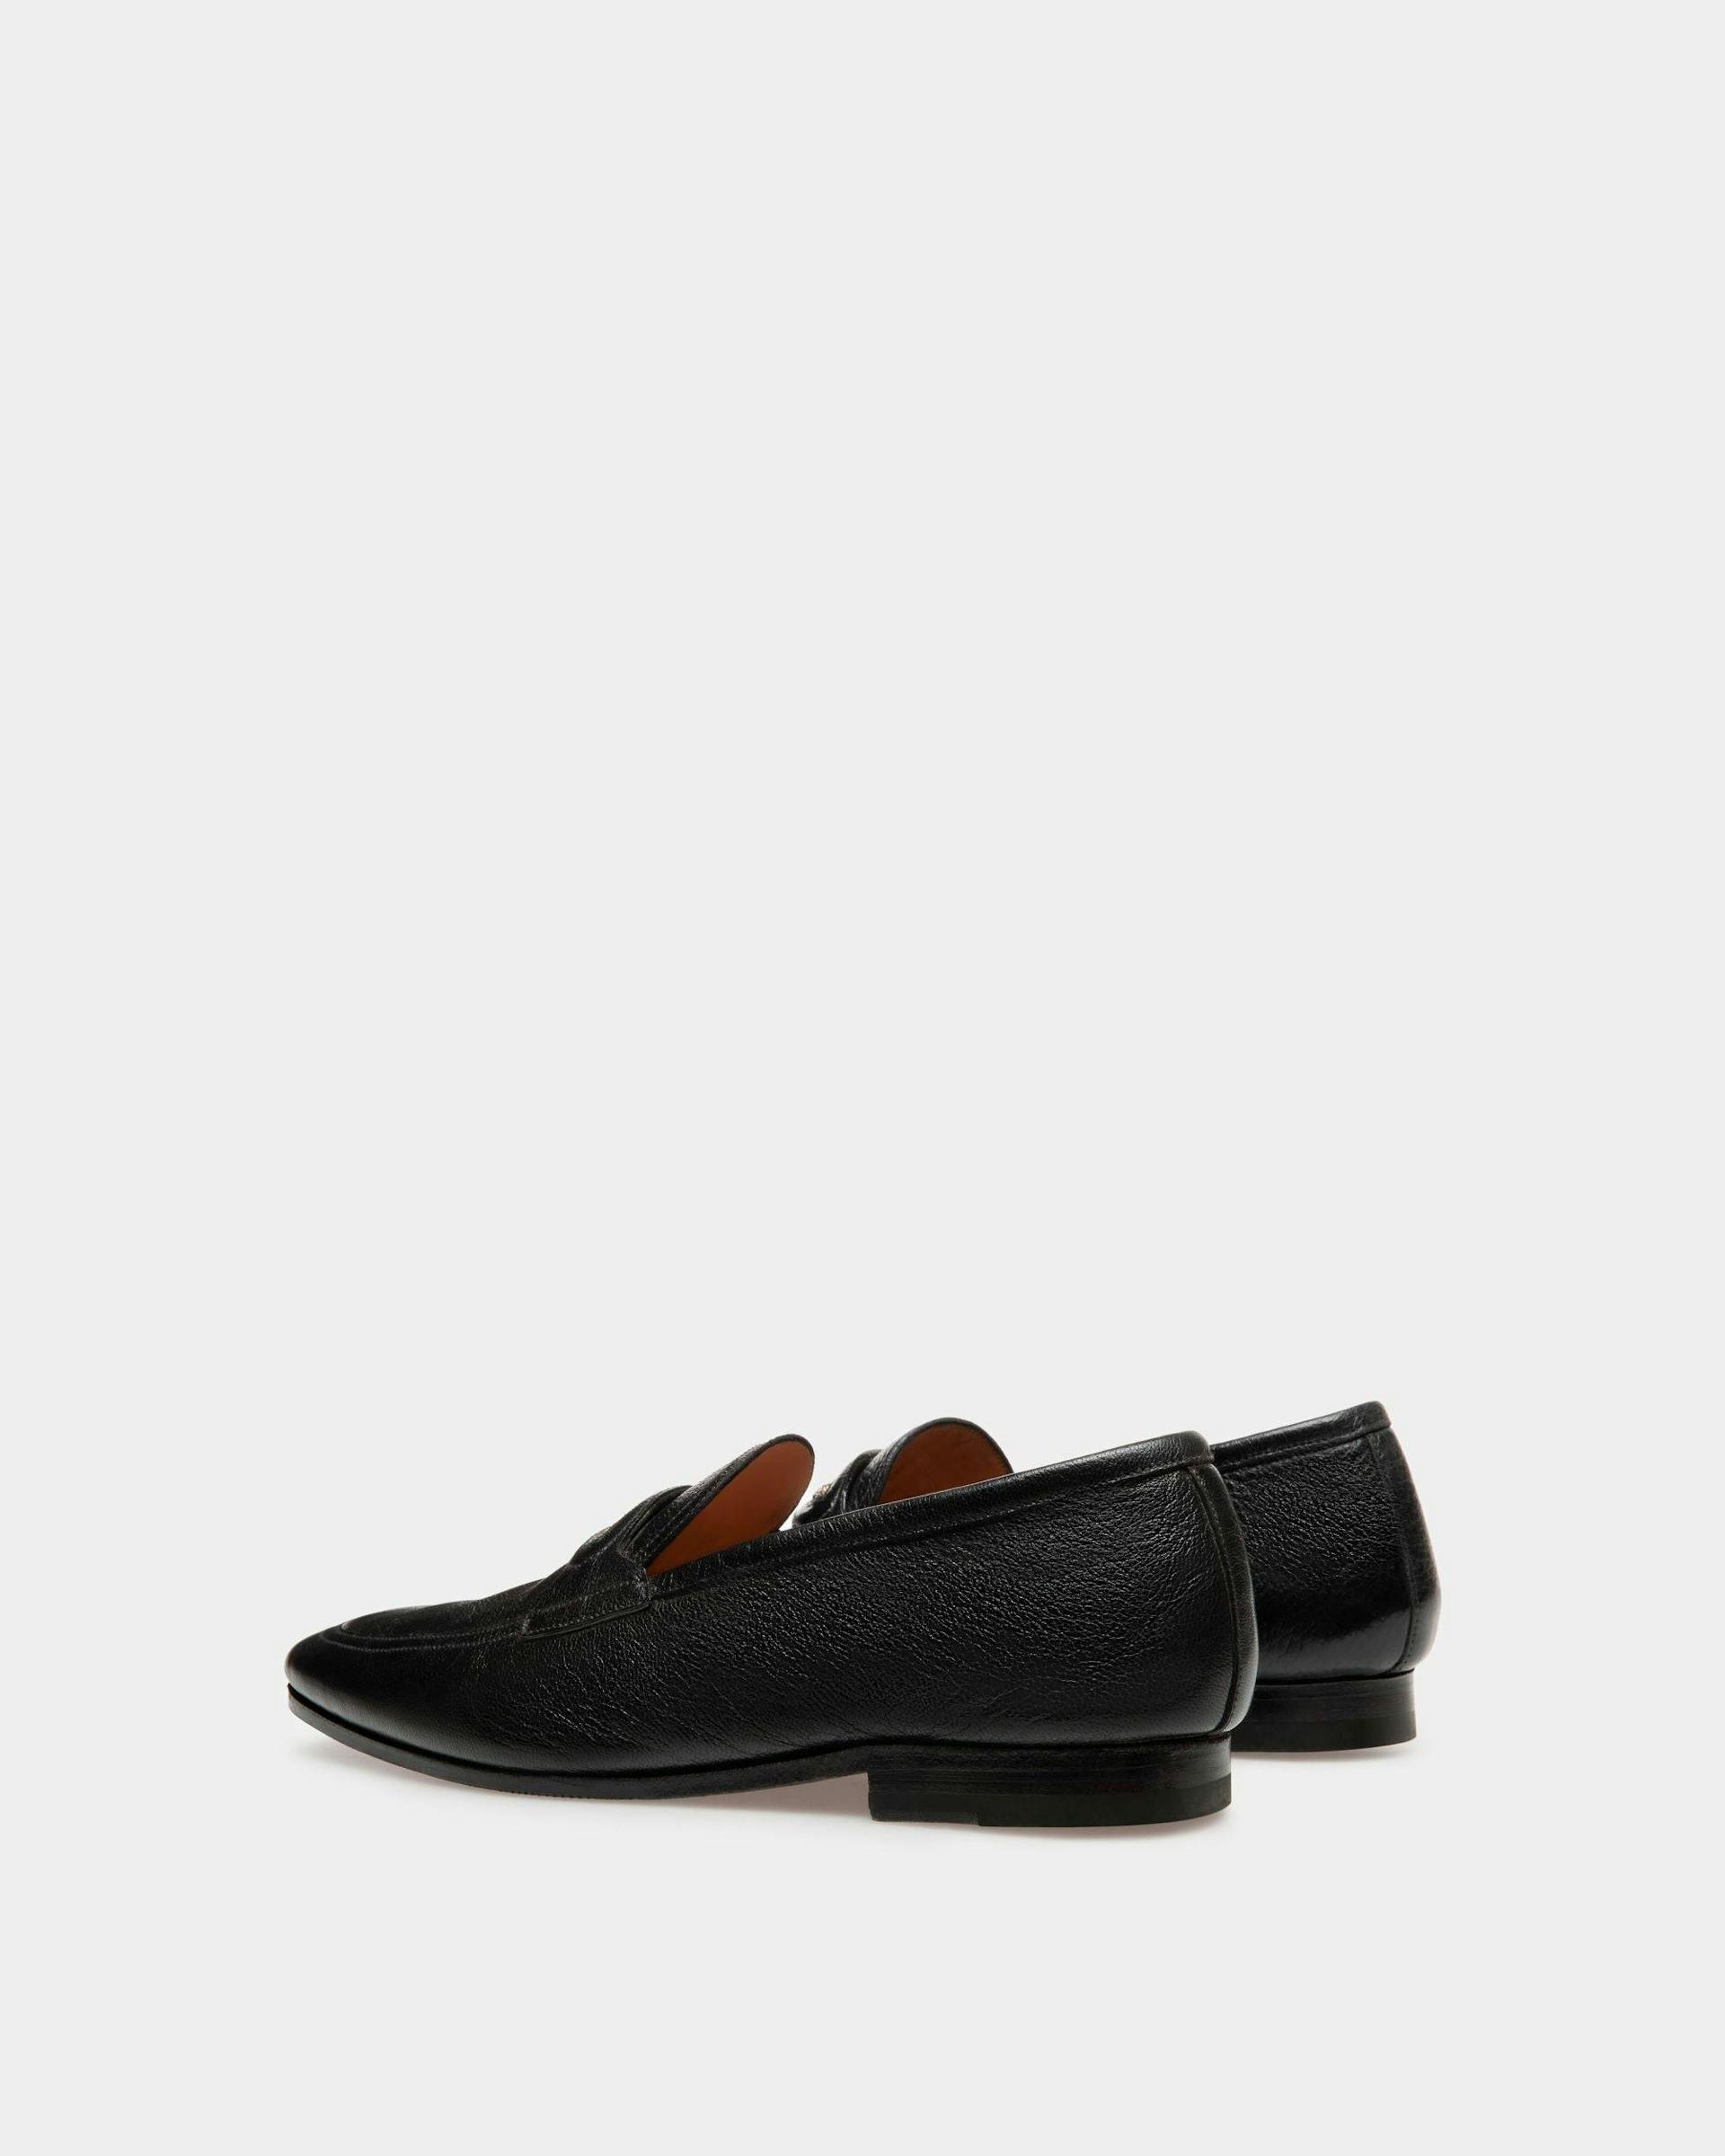 Men's Pesek Loafers In Black Leather | Bally | Still Life 3/4 Back